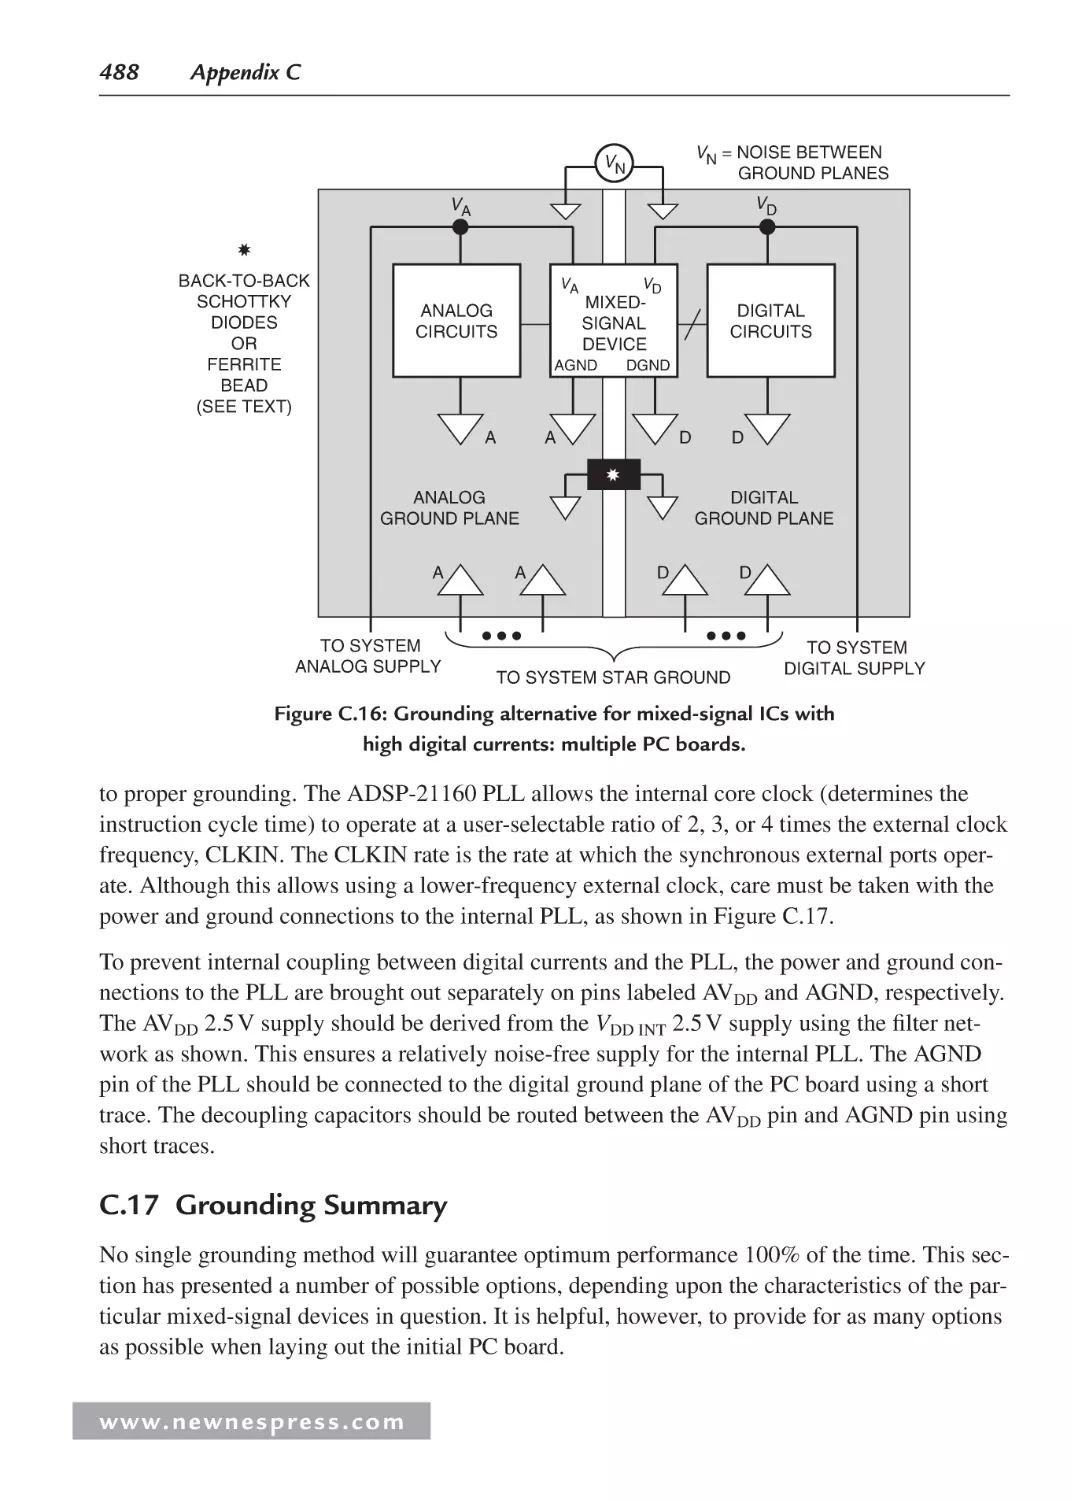 C.17 Grounding Summary